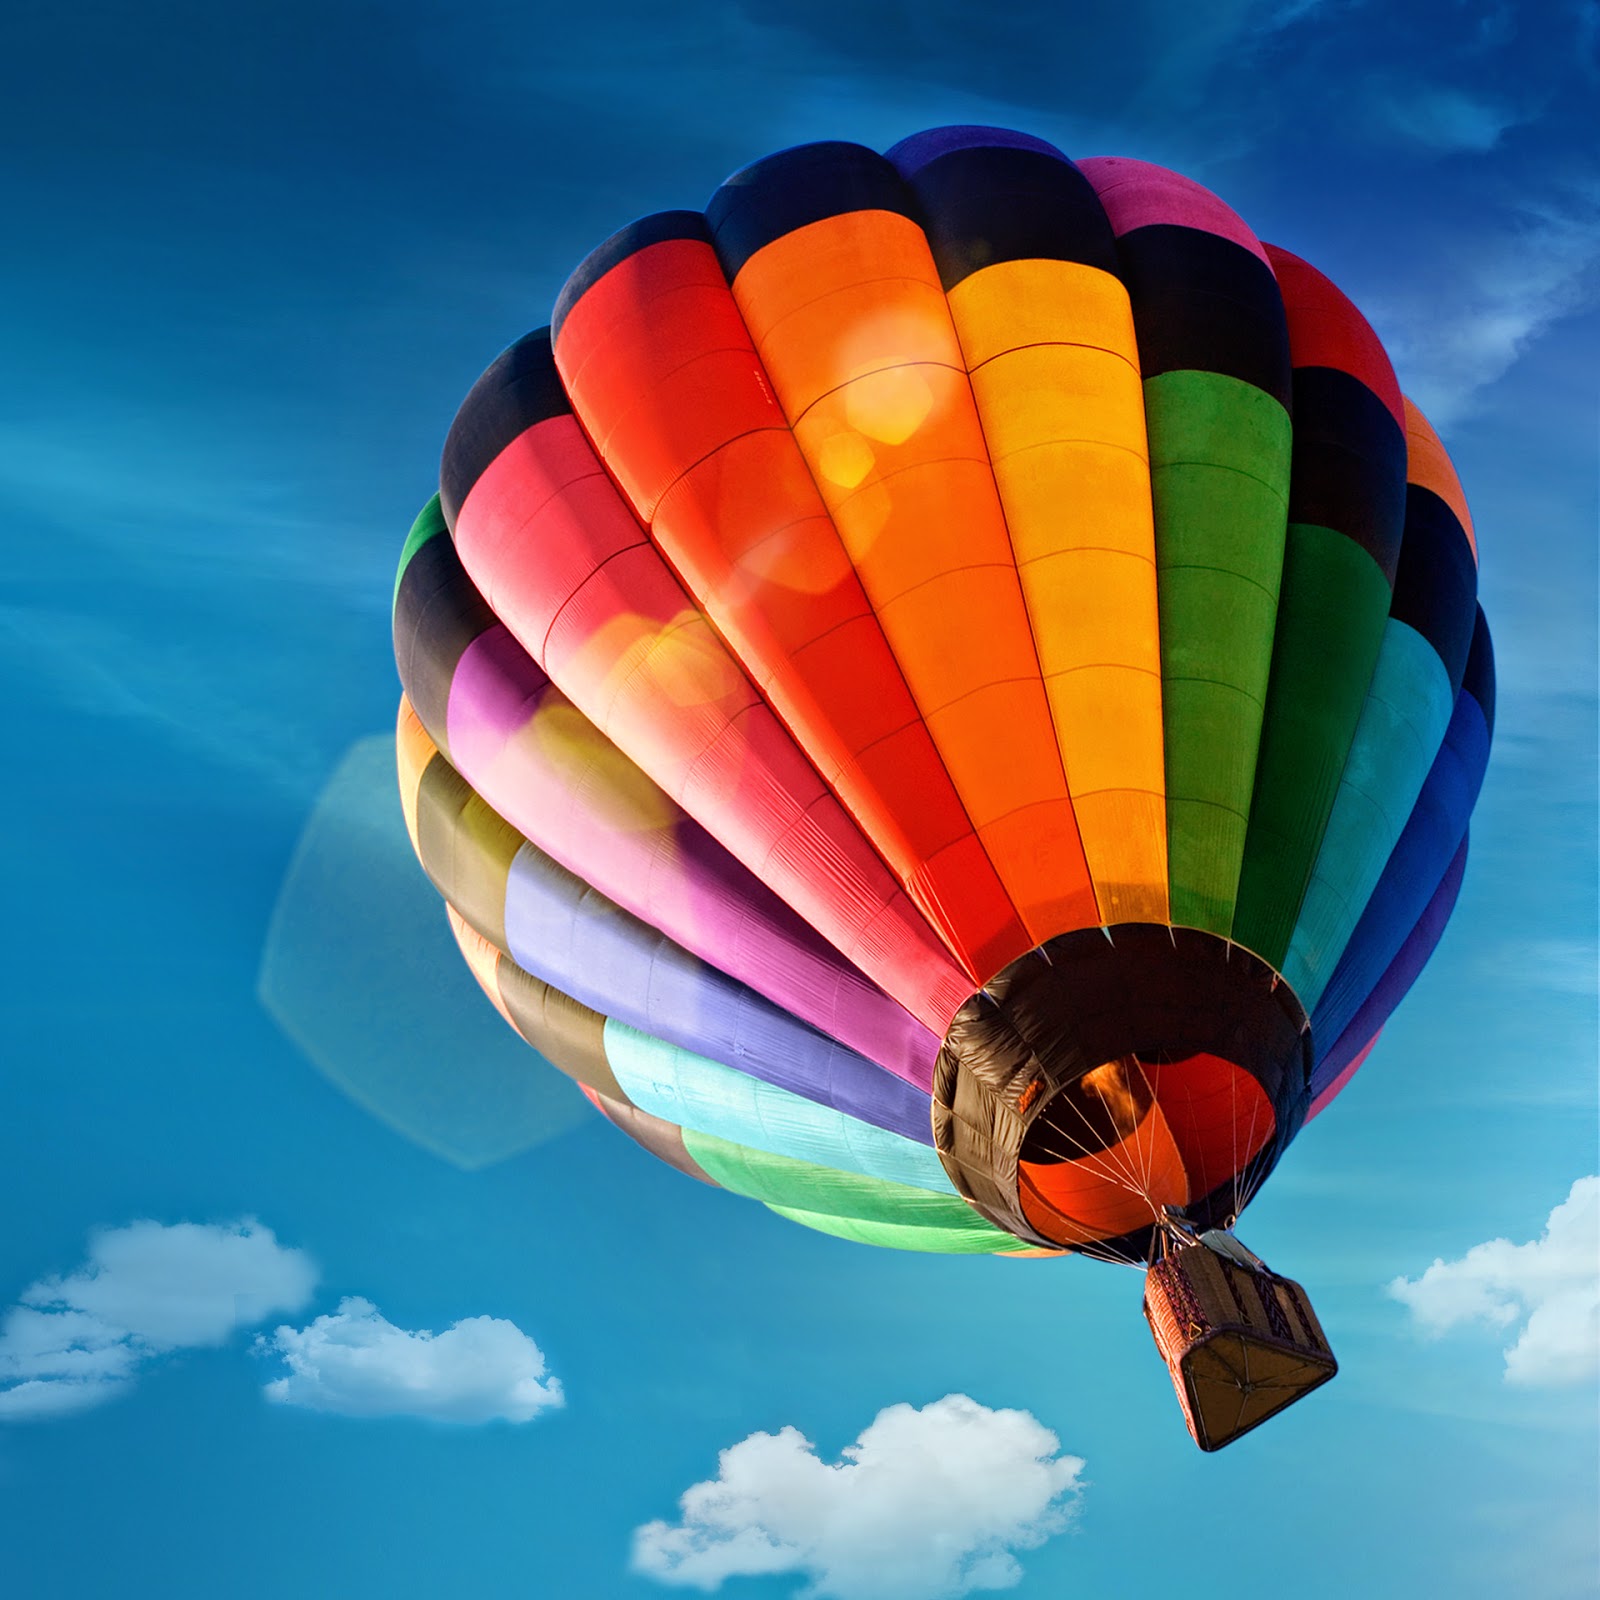 s4 live wallpaper,hot air ballooning,hot air balloon,sky,air sports,vehicle